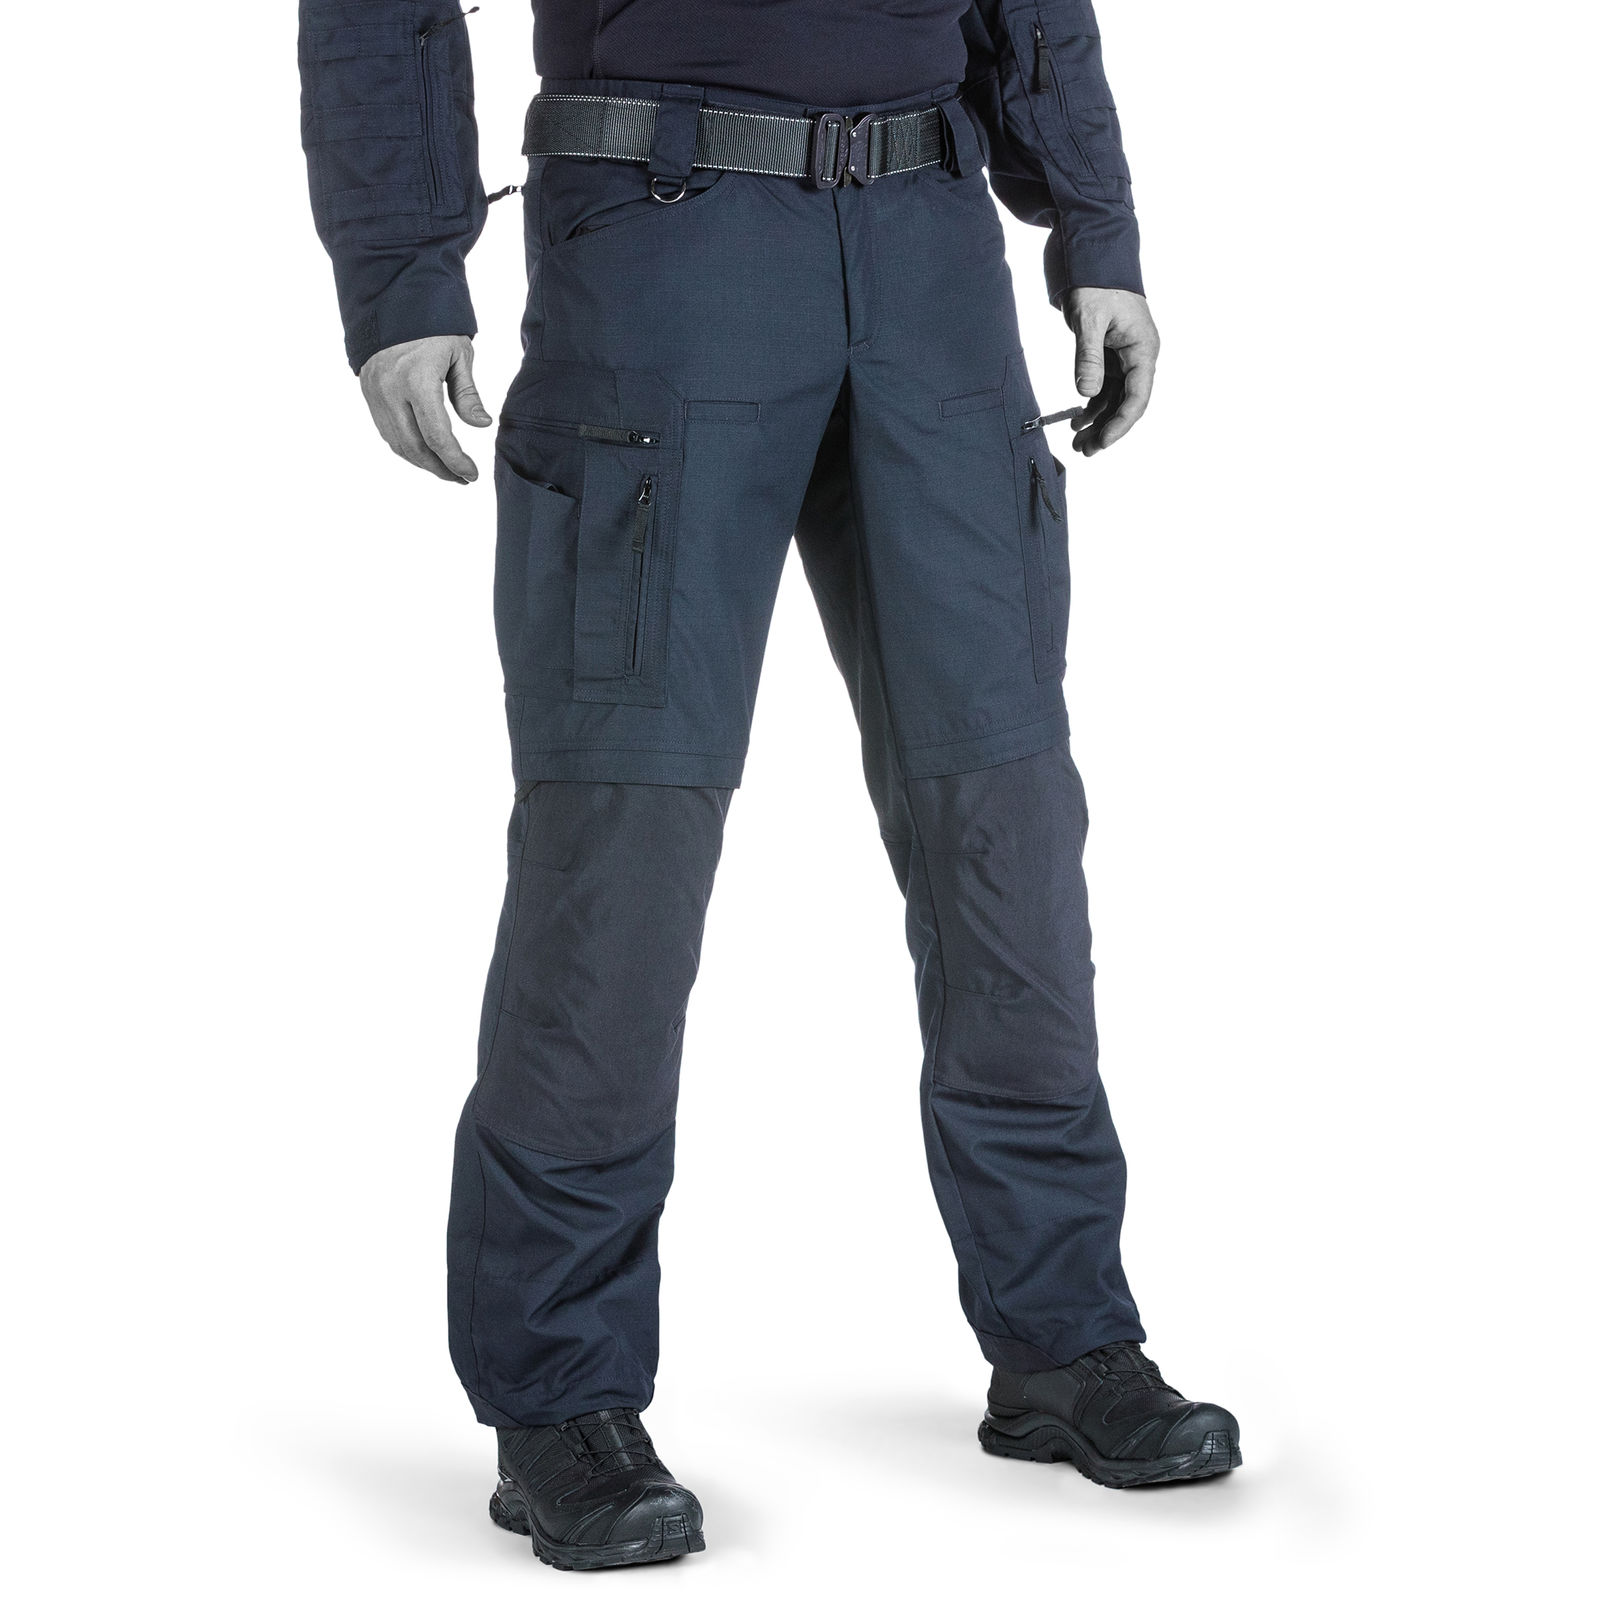 Men's Navy Blue Fatigue Pant - Rothco 6 Pocket Tactical Military BDU Work  Pants | eBay